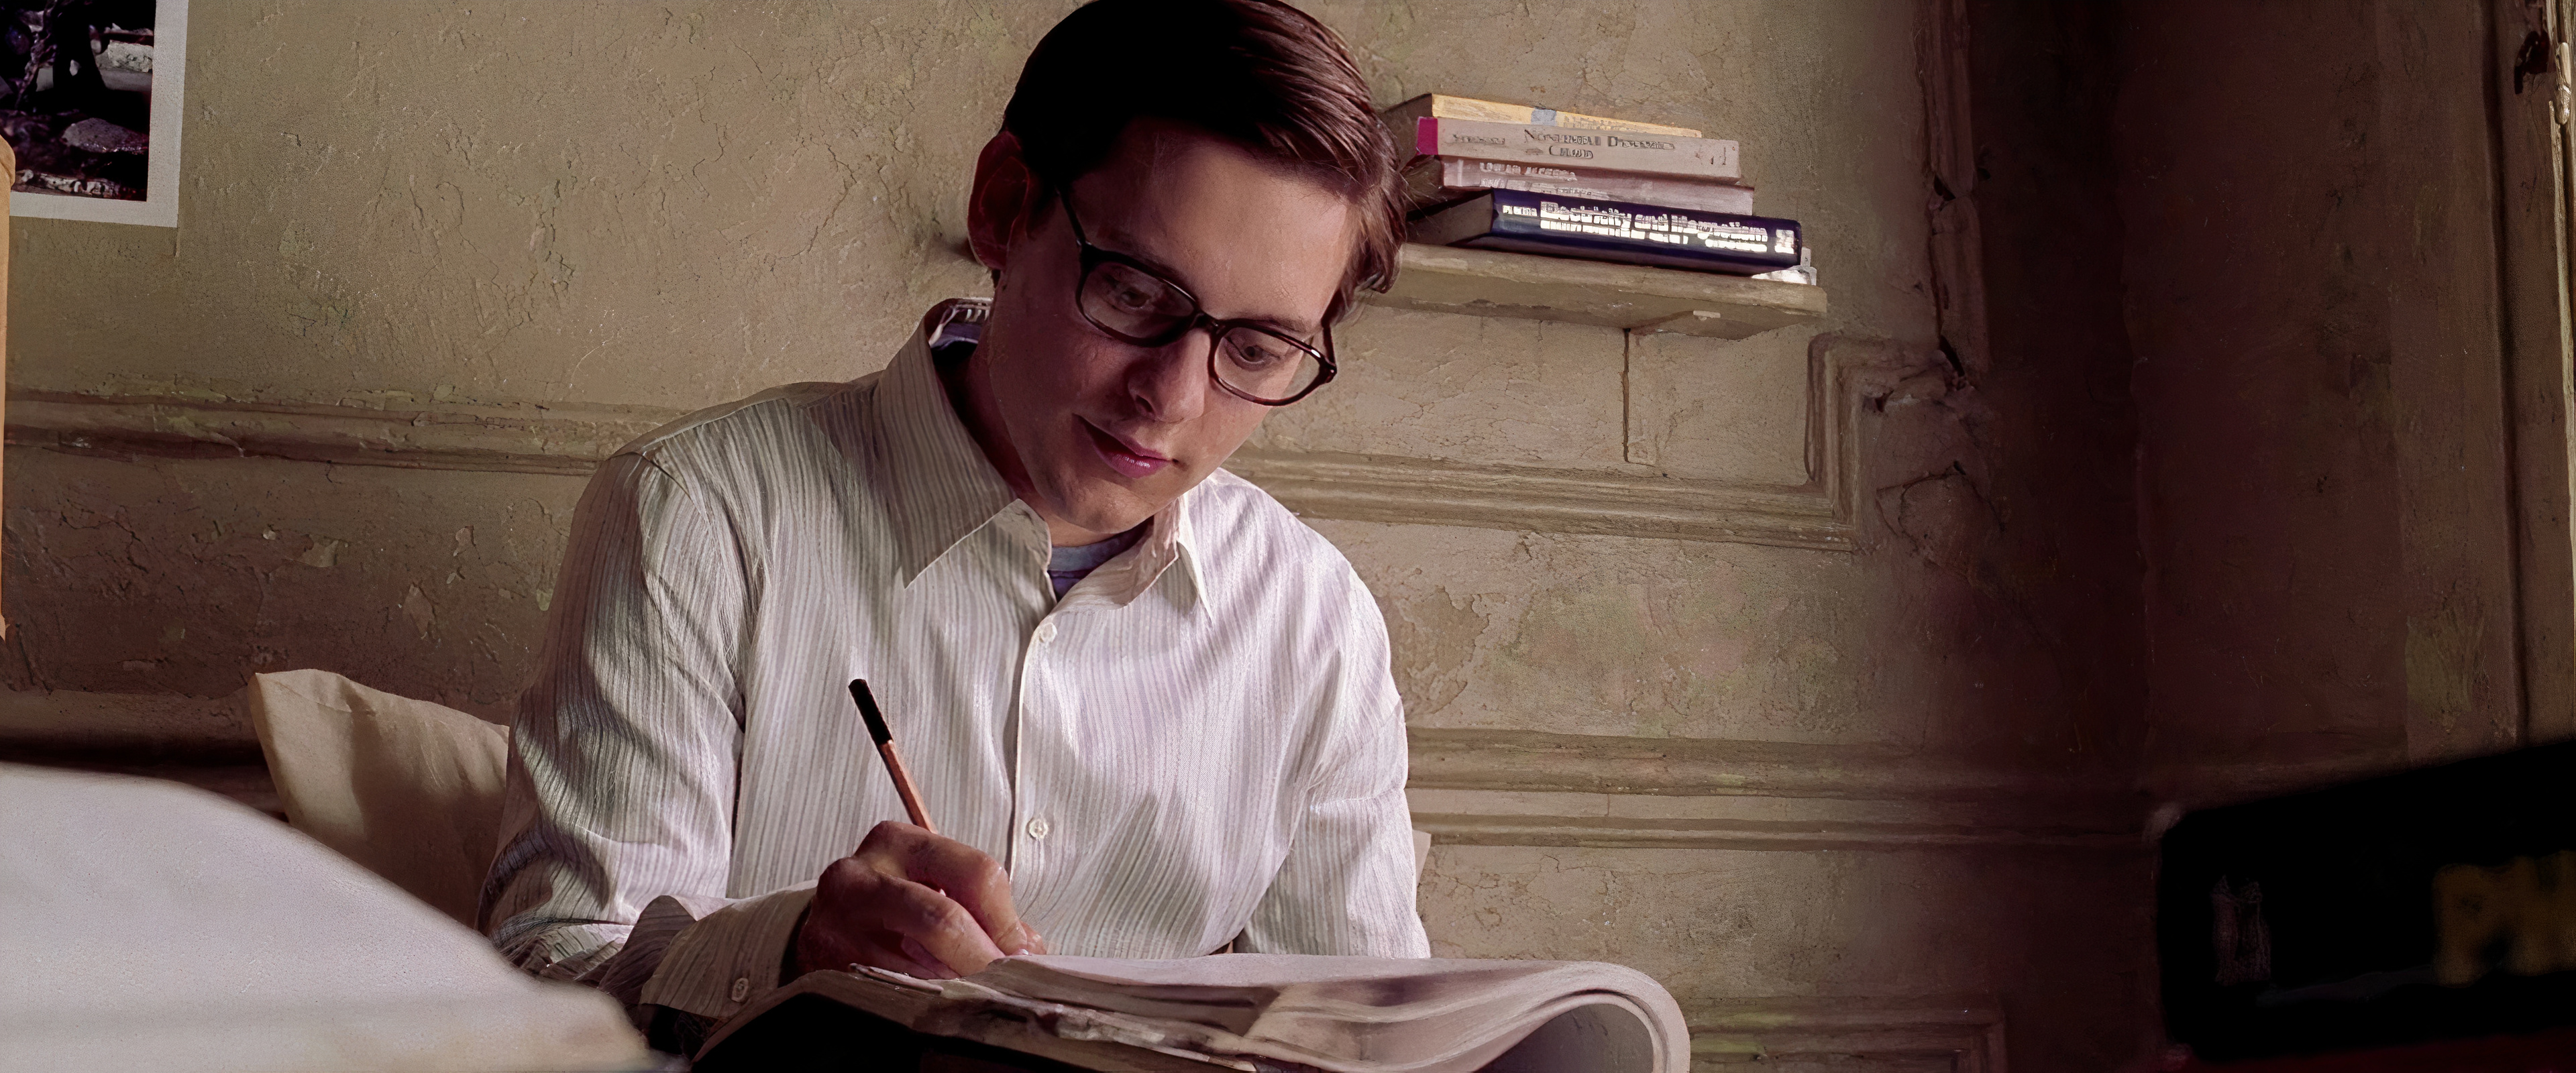 Peter Parker doing homework